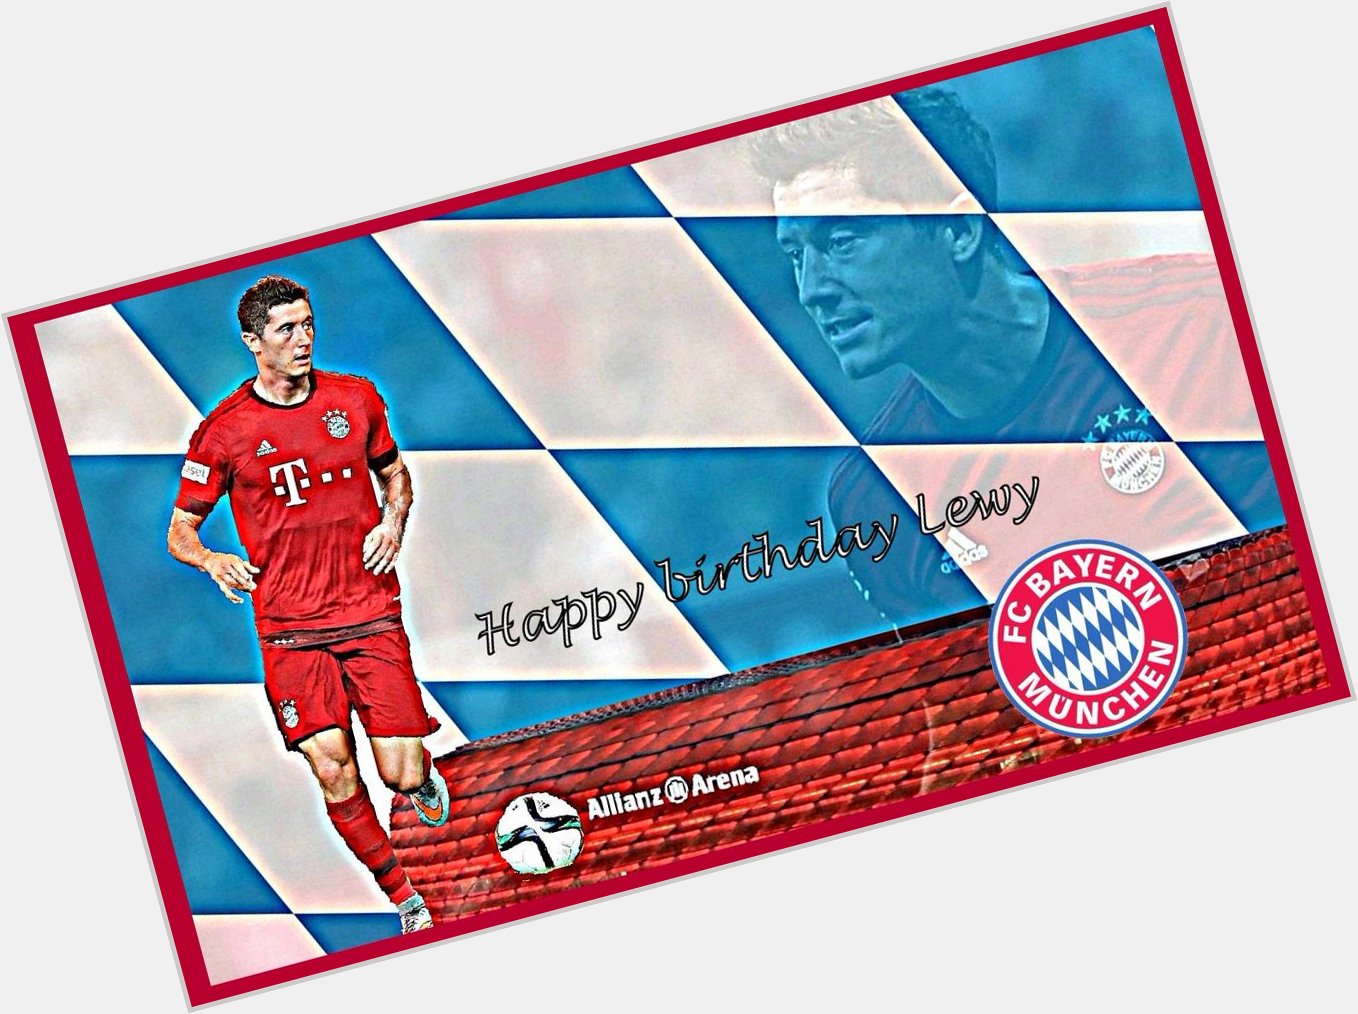 Happy birthday to bayern striker Robert Lewandowski.
Hope he make tomorrow a goal for his birthday :D. 